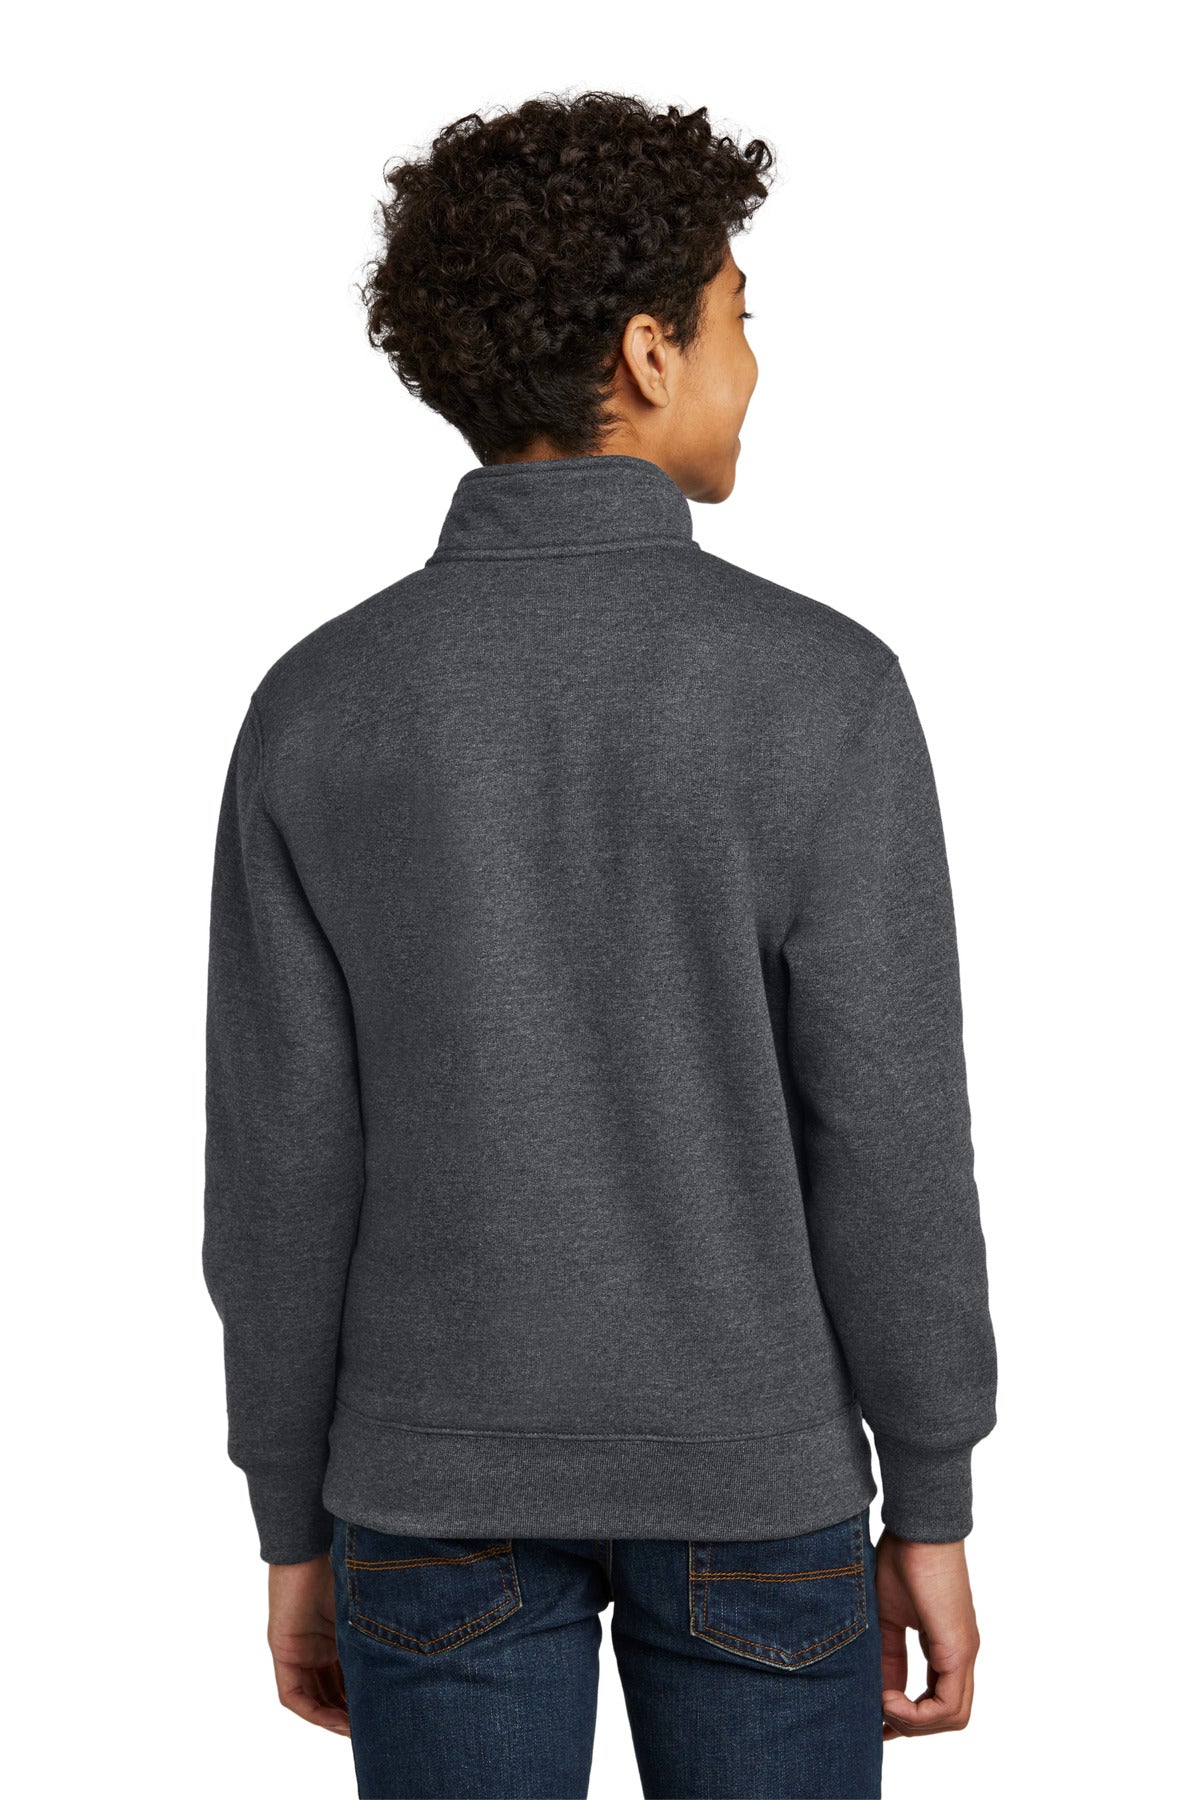 Port & Company Youth Core Fleece 1/4-Zip Pullover Sweatshirt PC78YQ